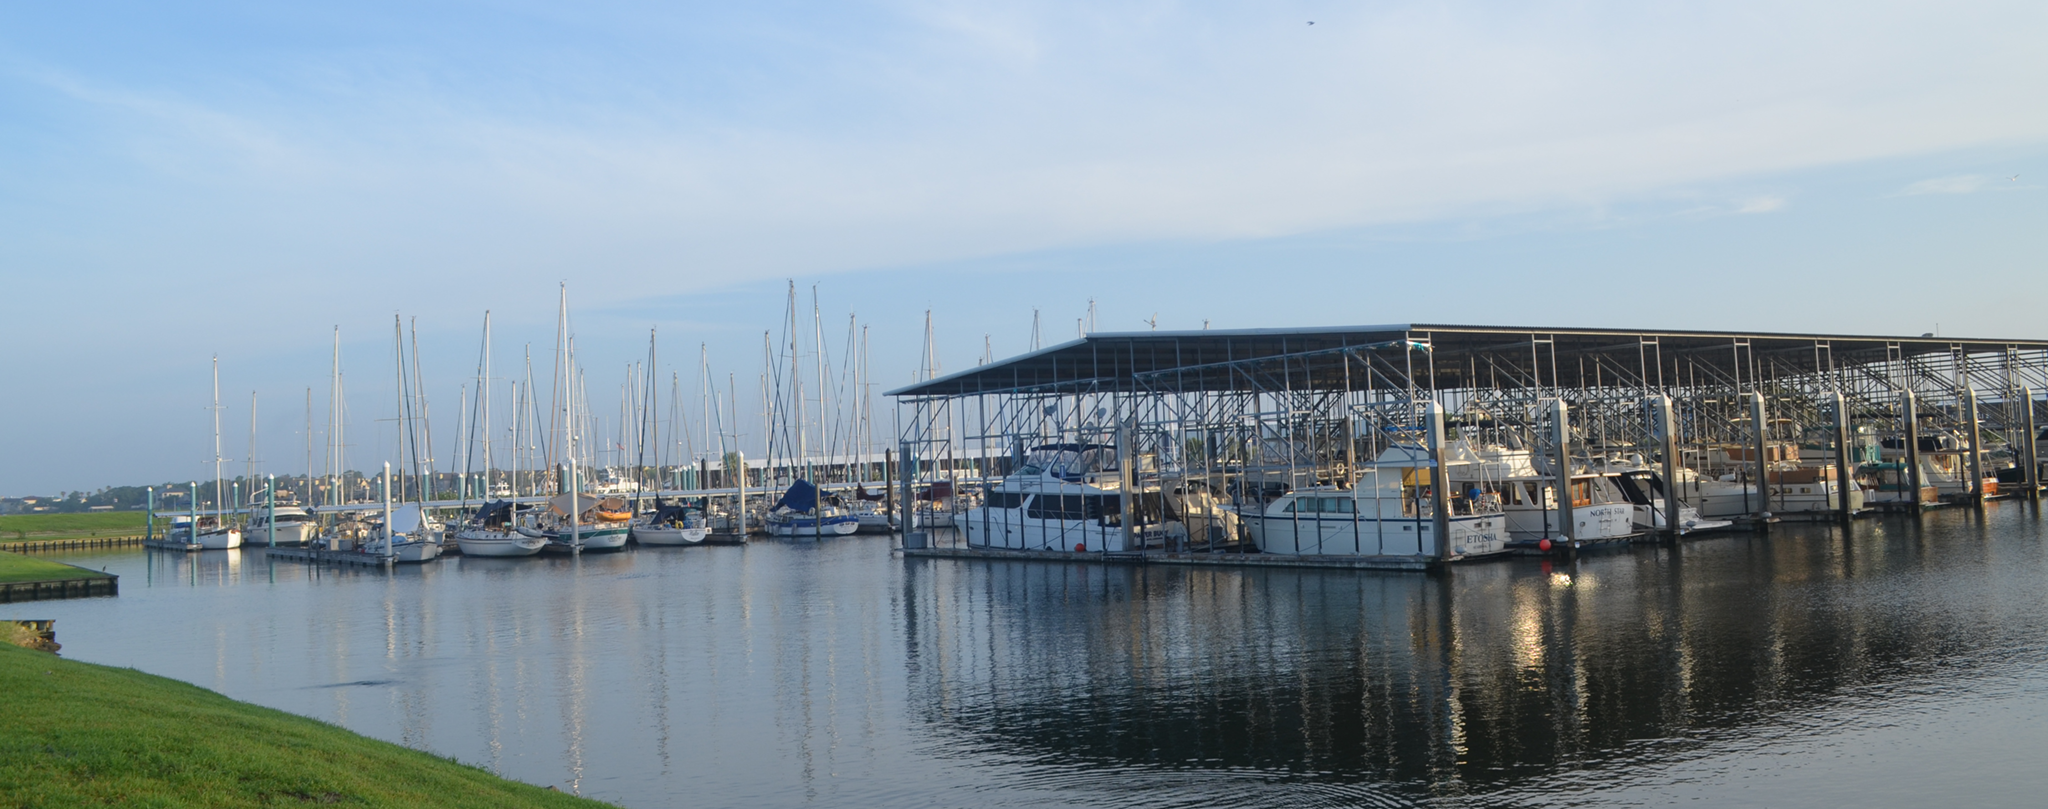 Seabrook Marina largest marina on the Gulf Coast in Texas